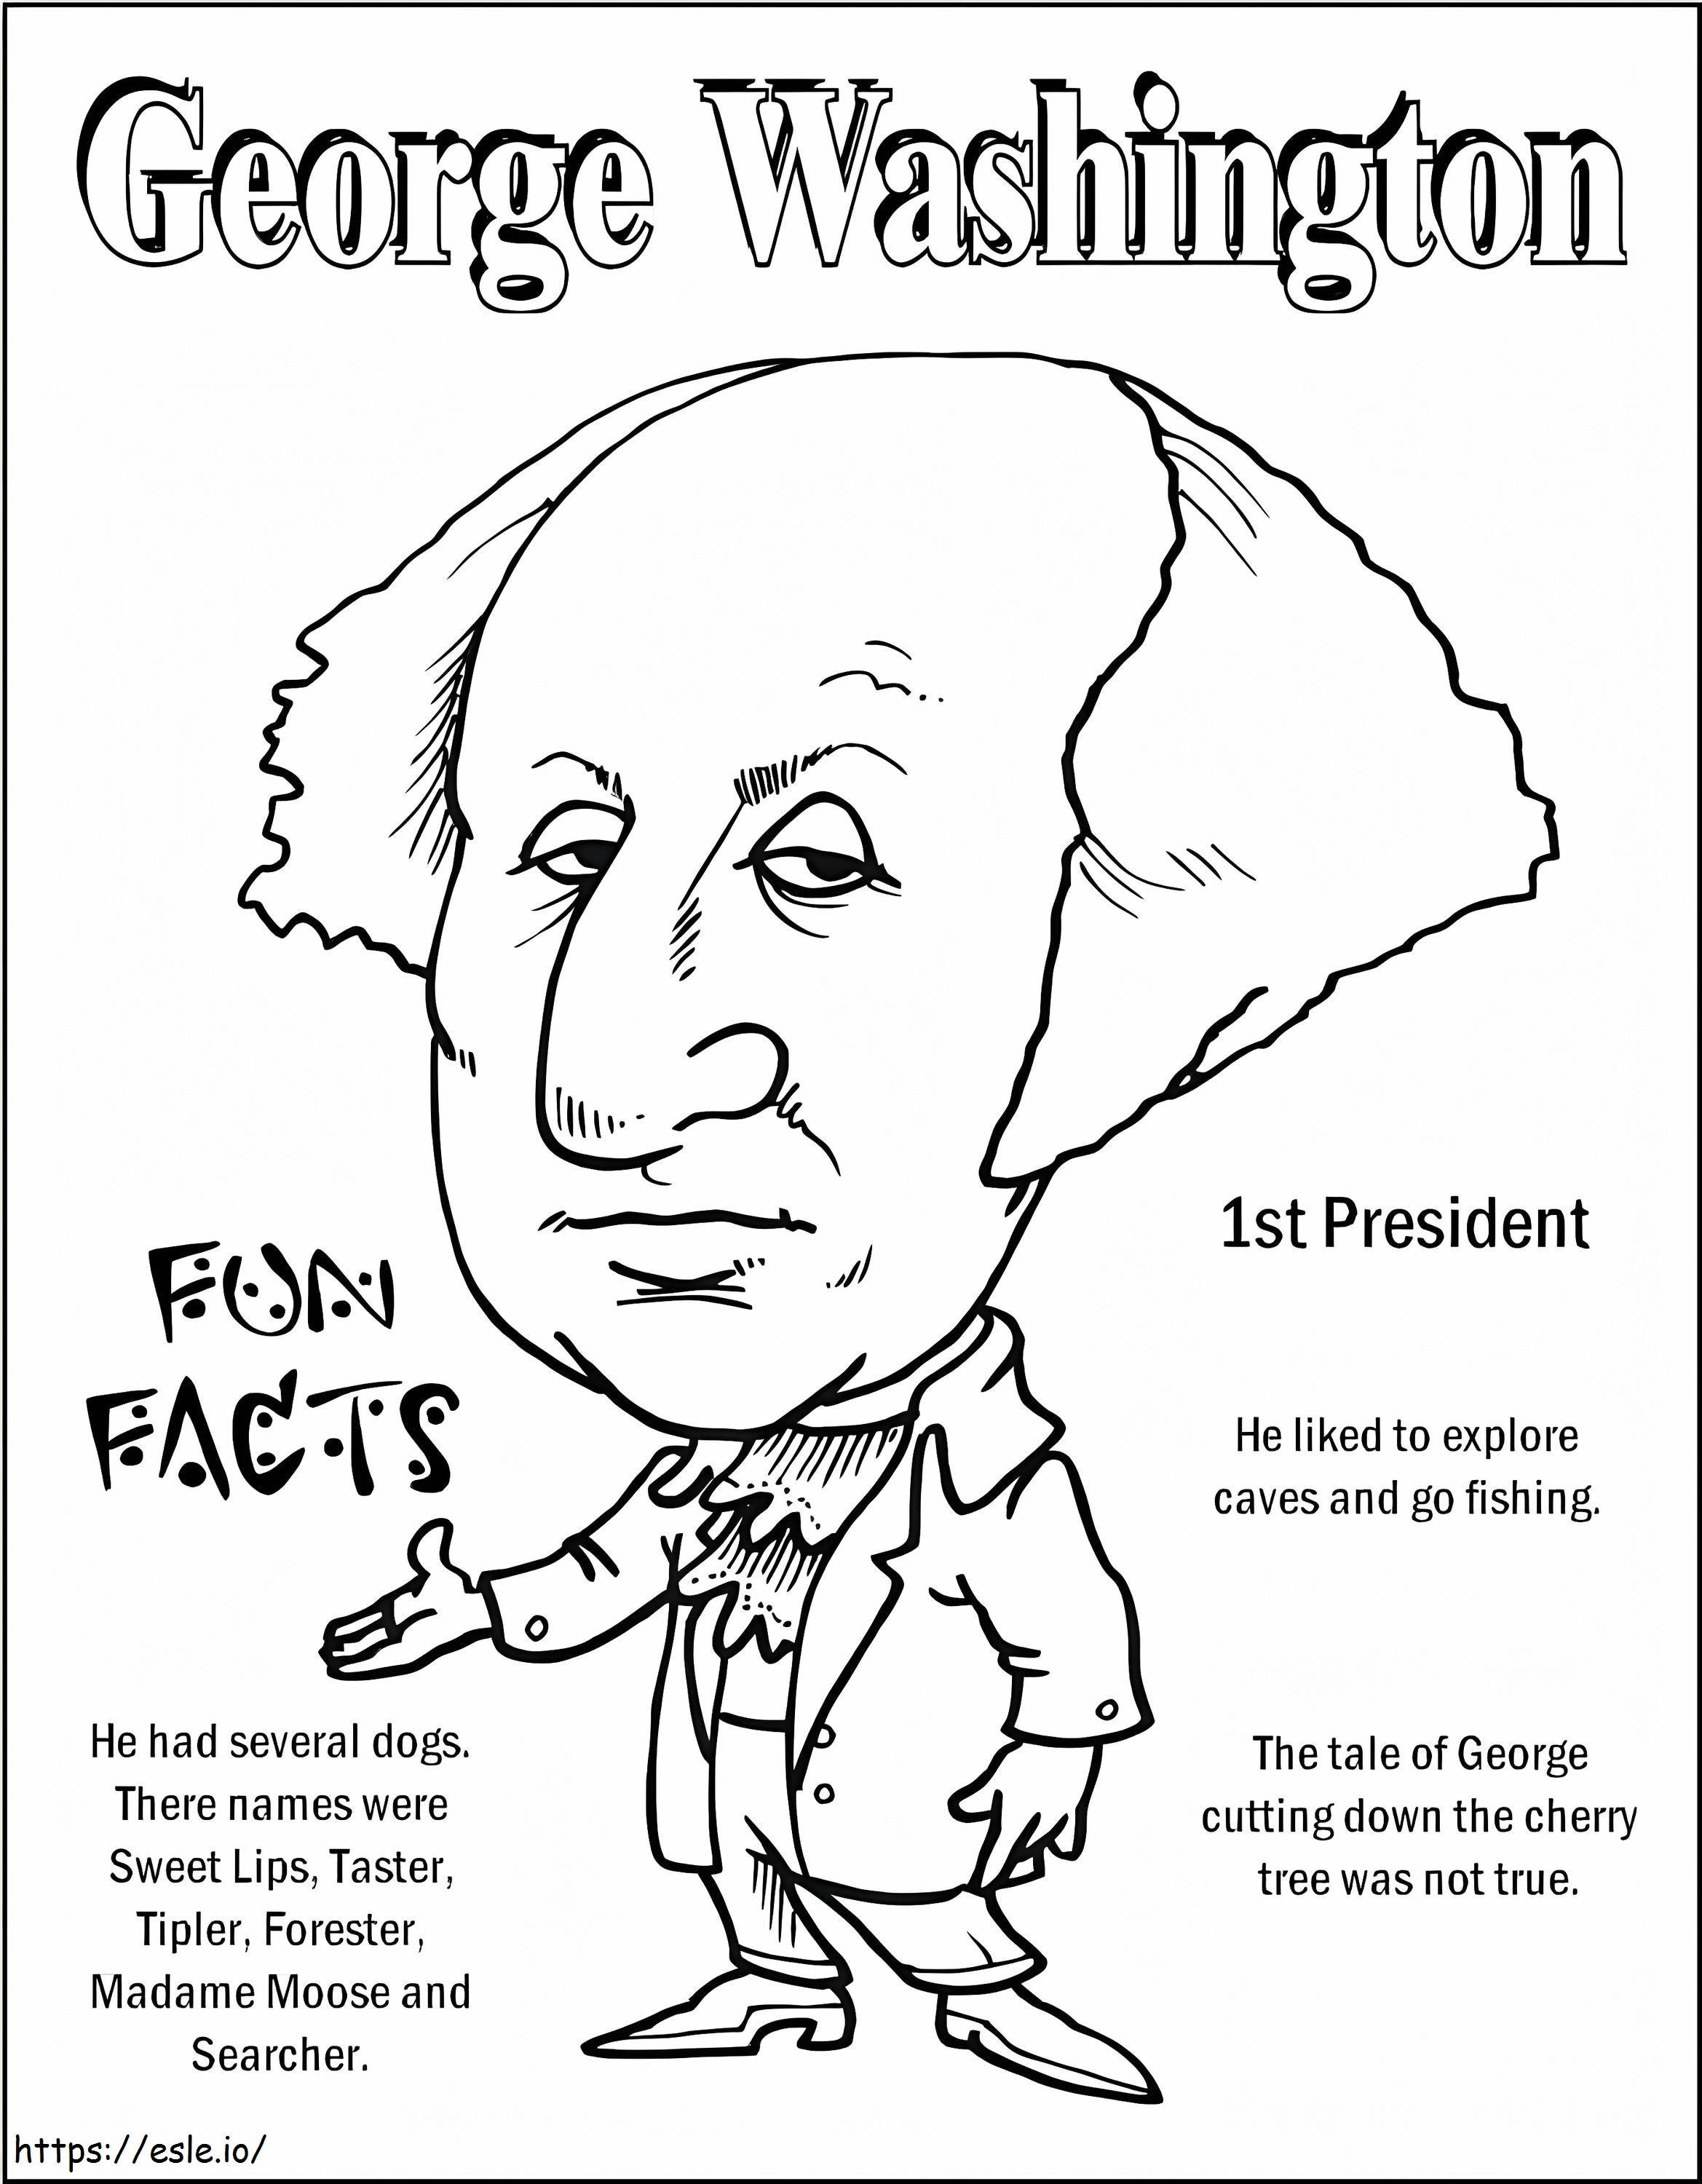 George Washington Fun Facts coloring page